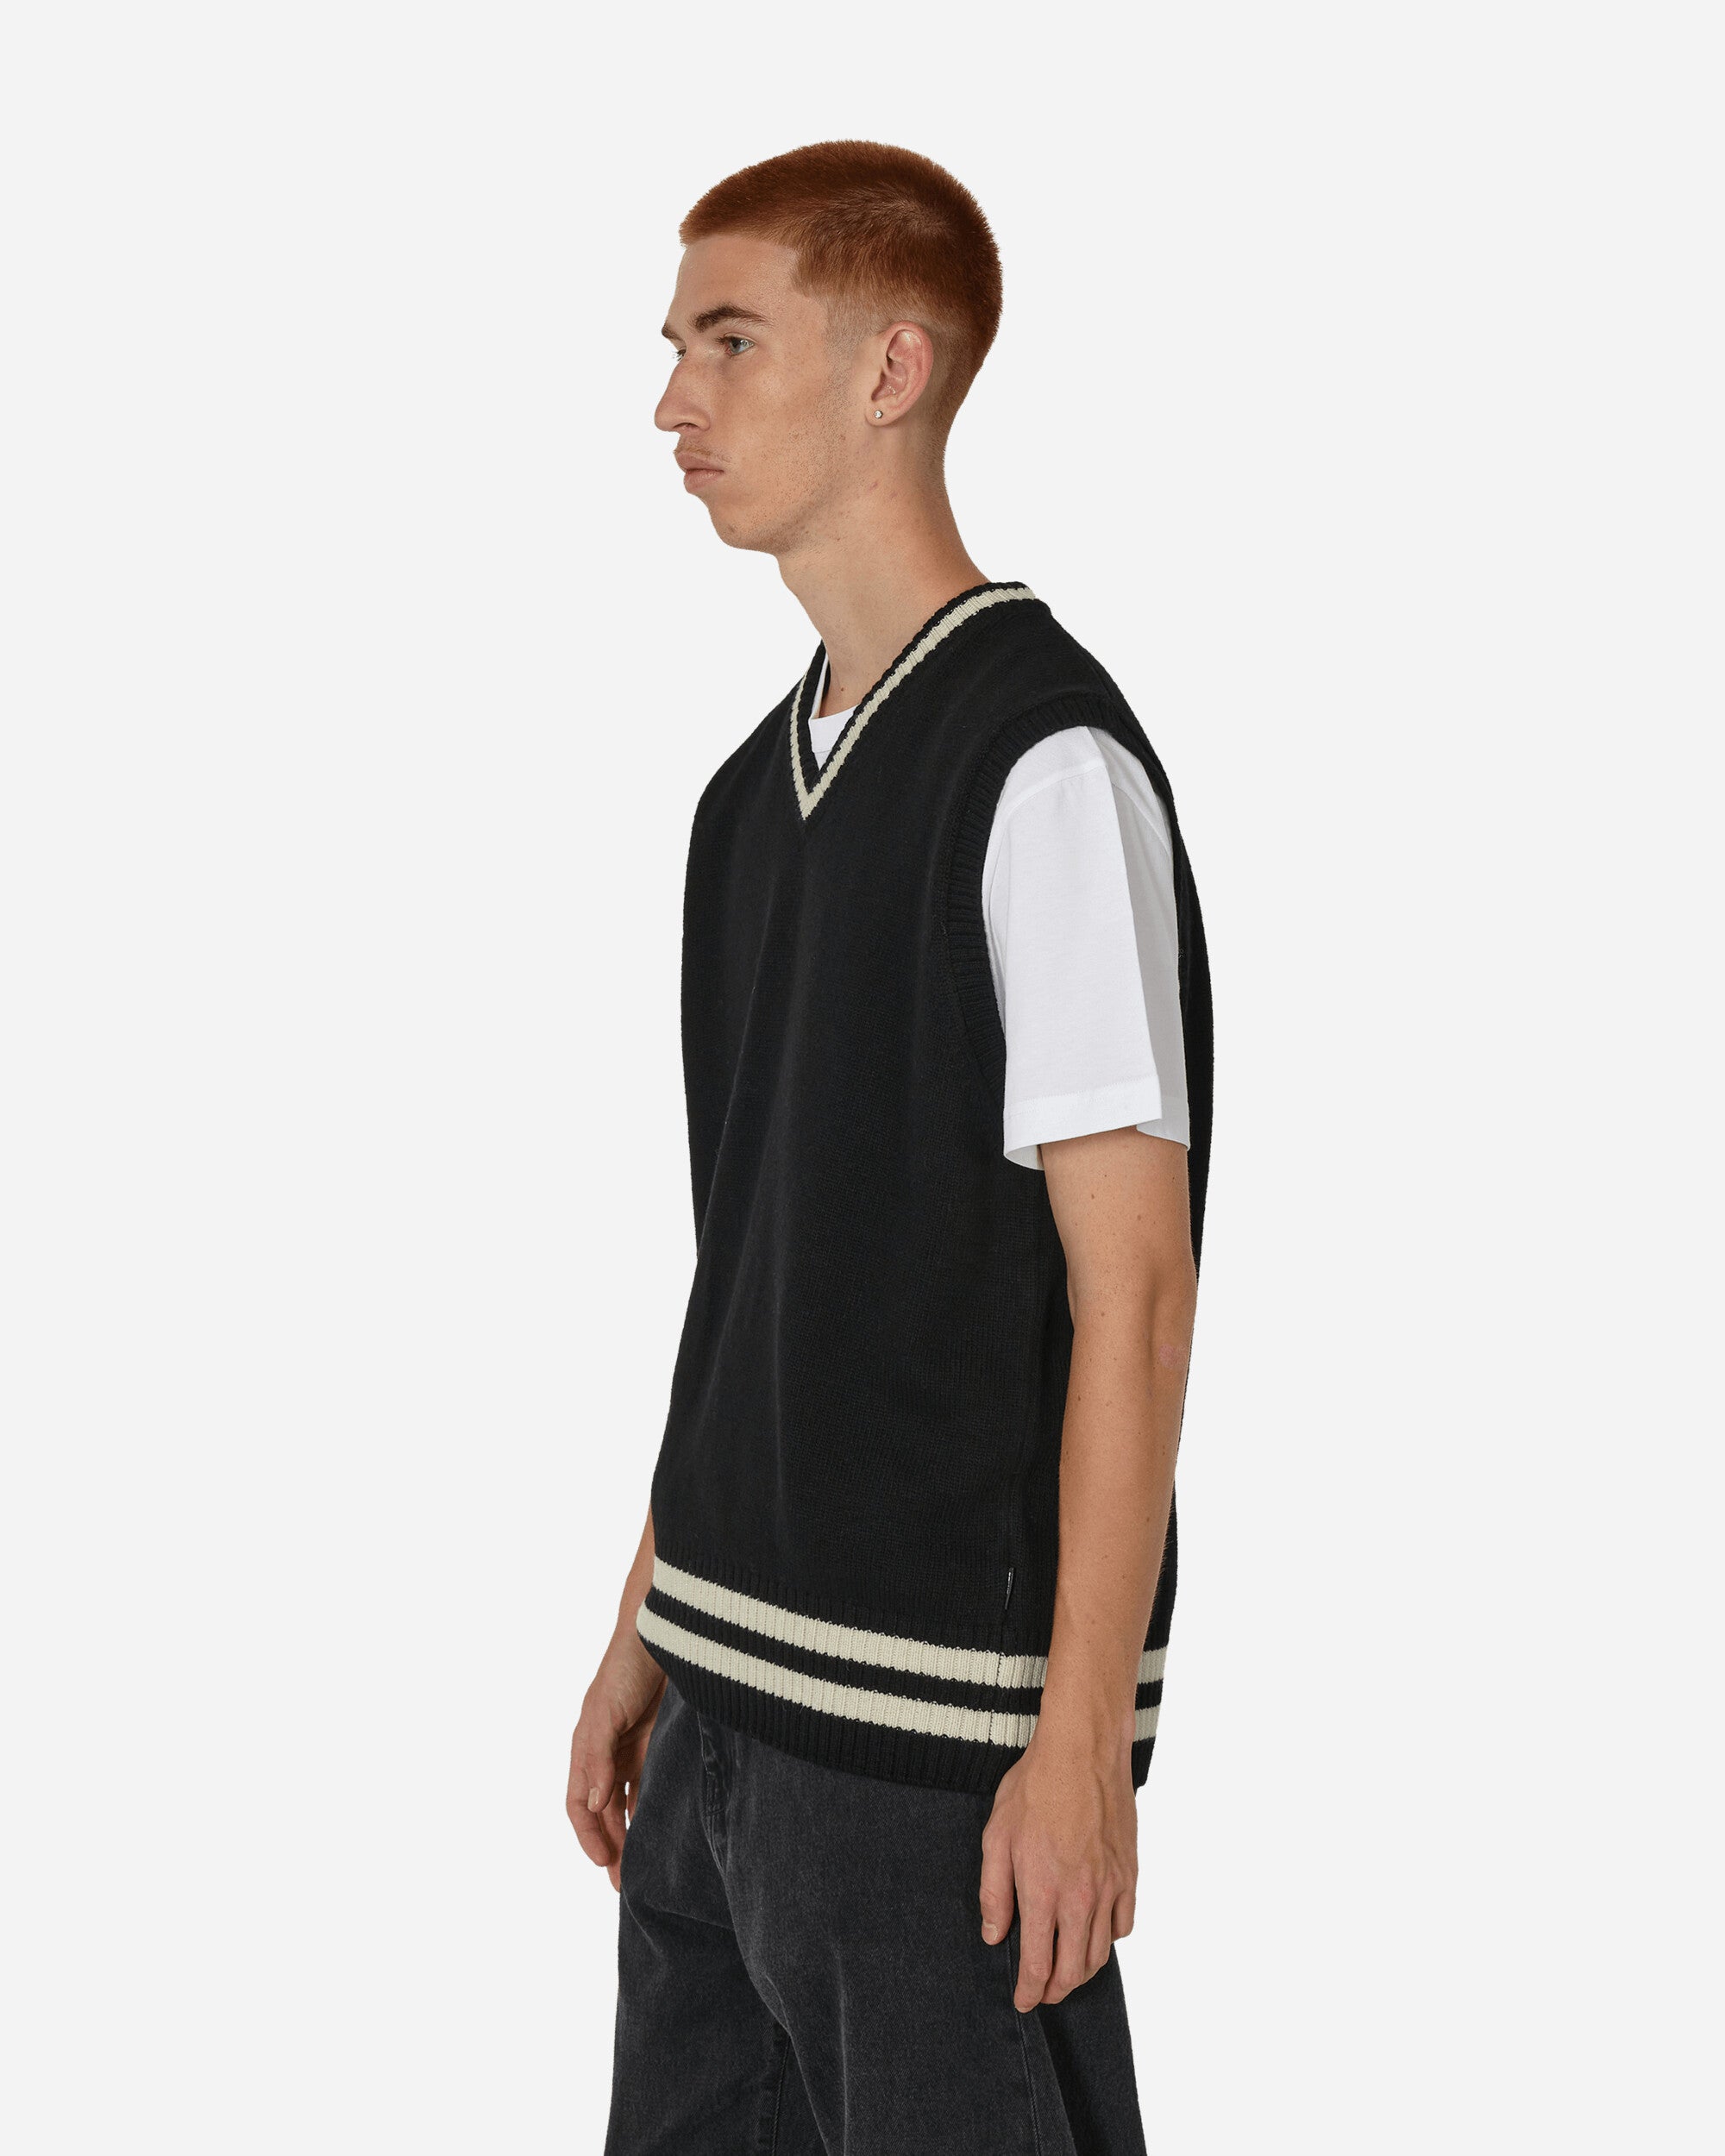 Carhartt WIP Stanford Vest Sweater Black/Salt Knitwears Gilets I032282 1T8XX